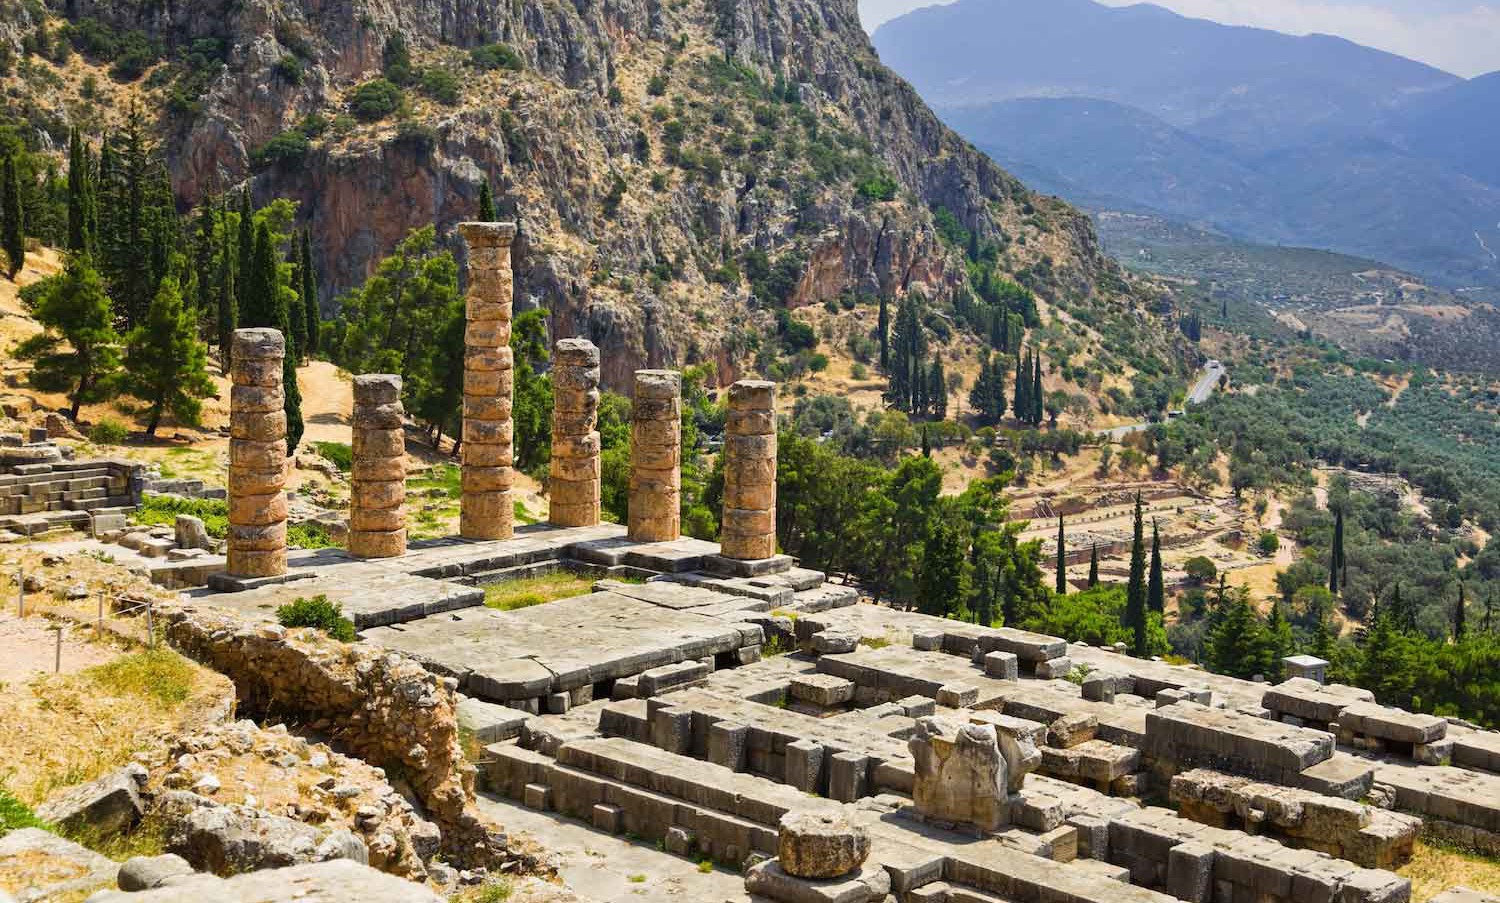 The Delphi Forum, 20-21 June 2015, Delphi, Greece